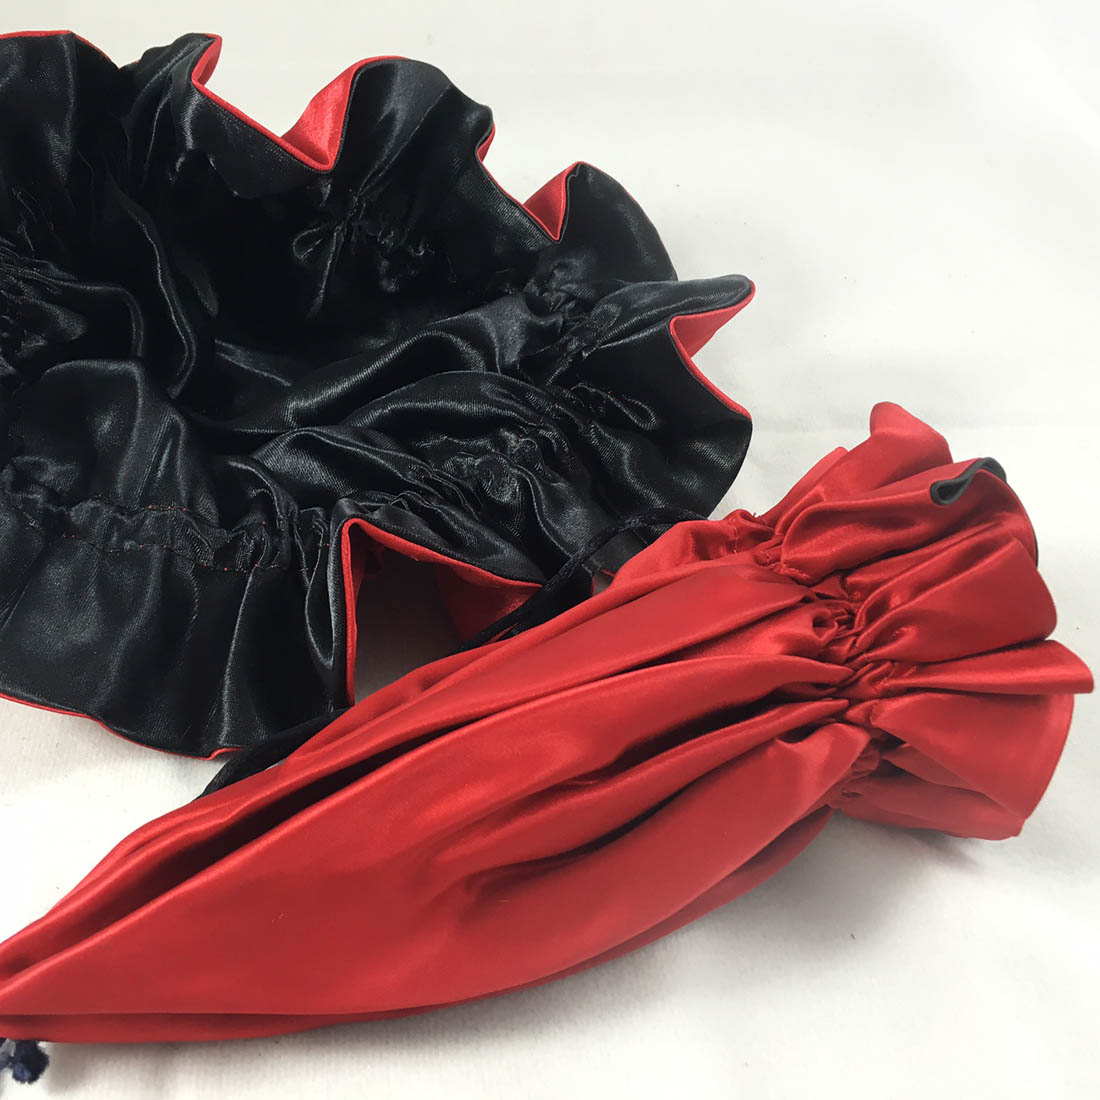 Traditional Chinese red Drawstring Bag